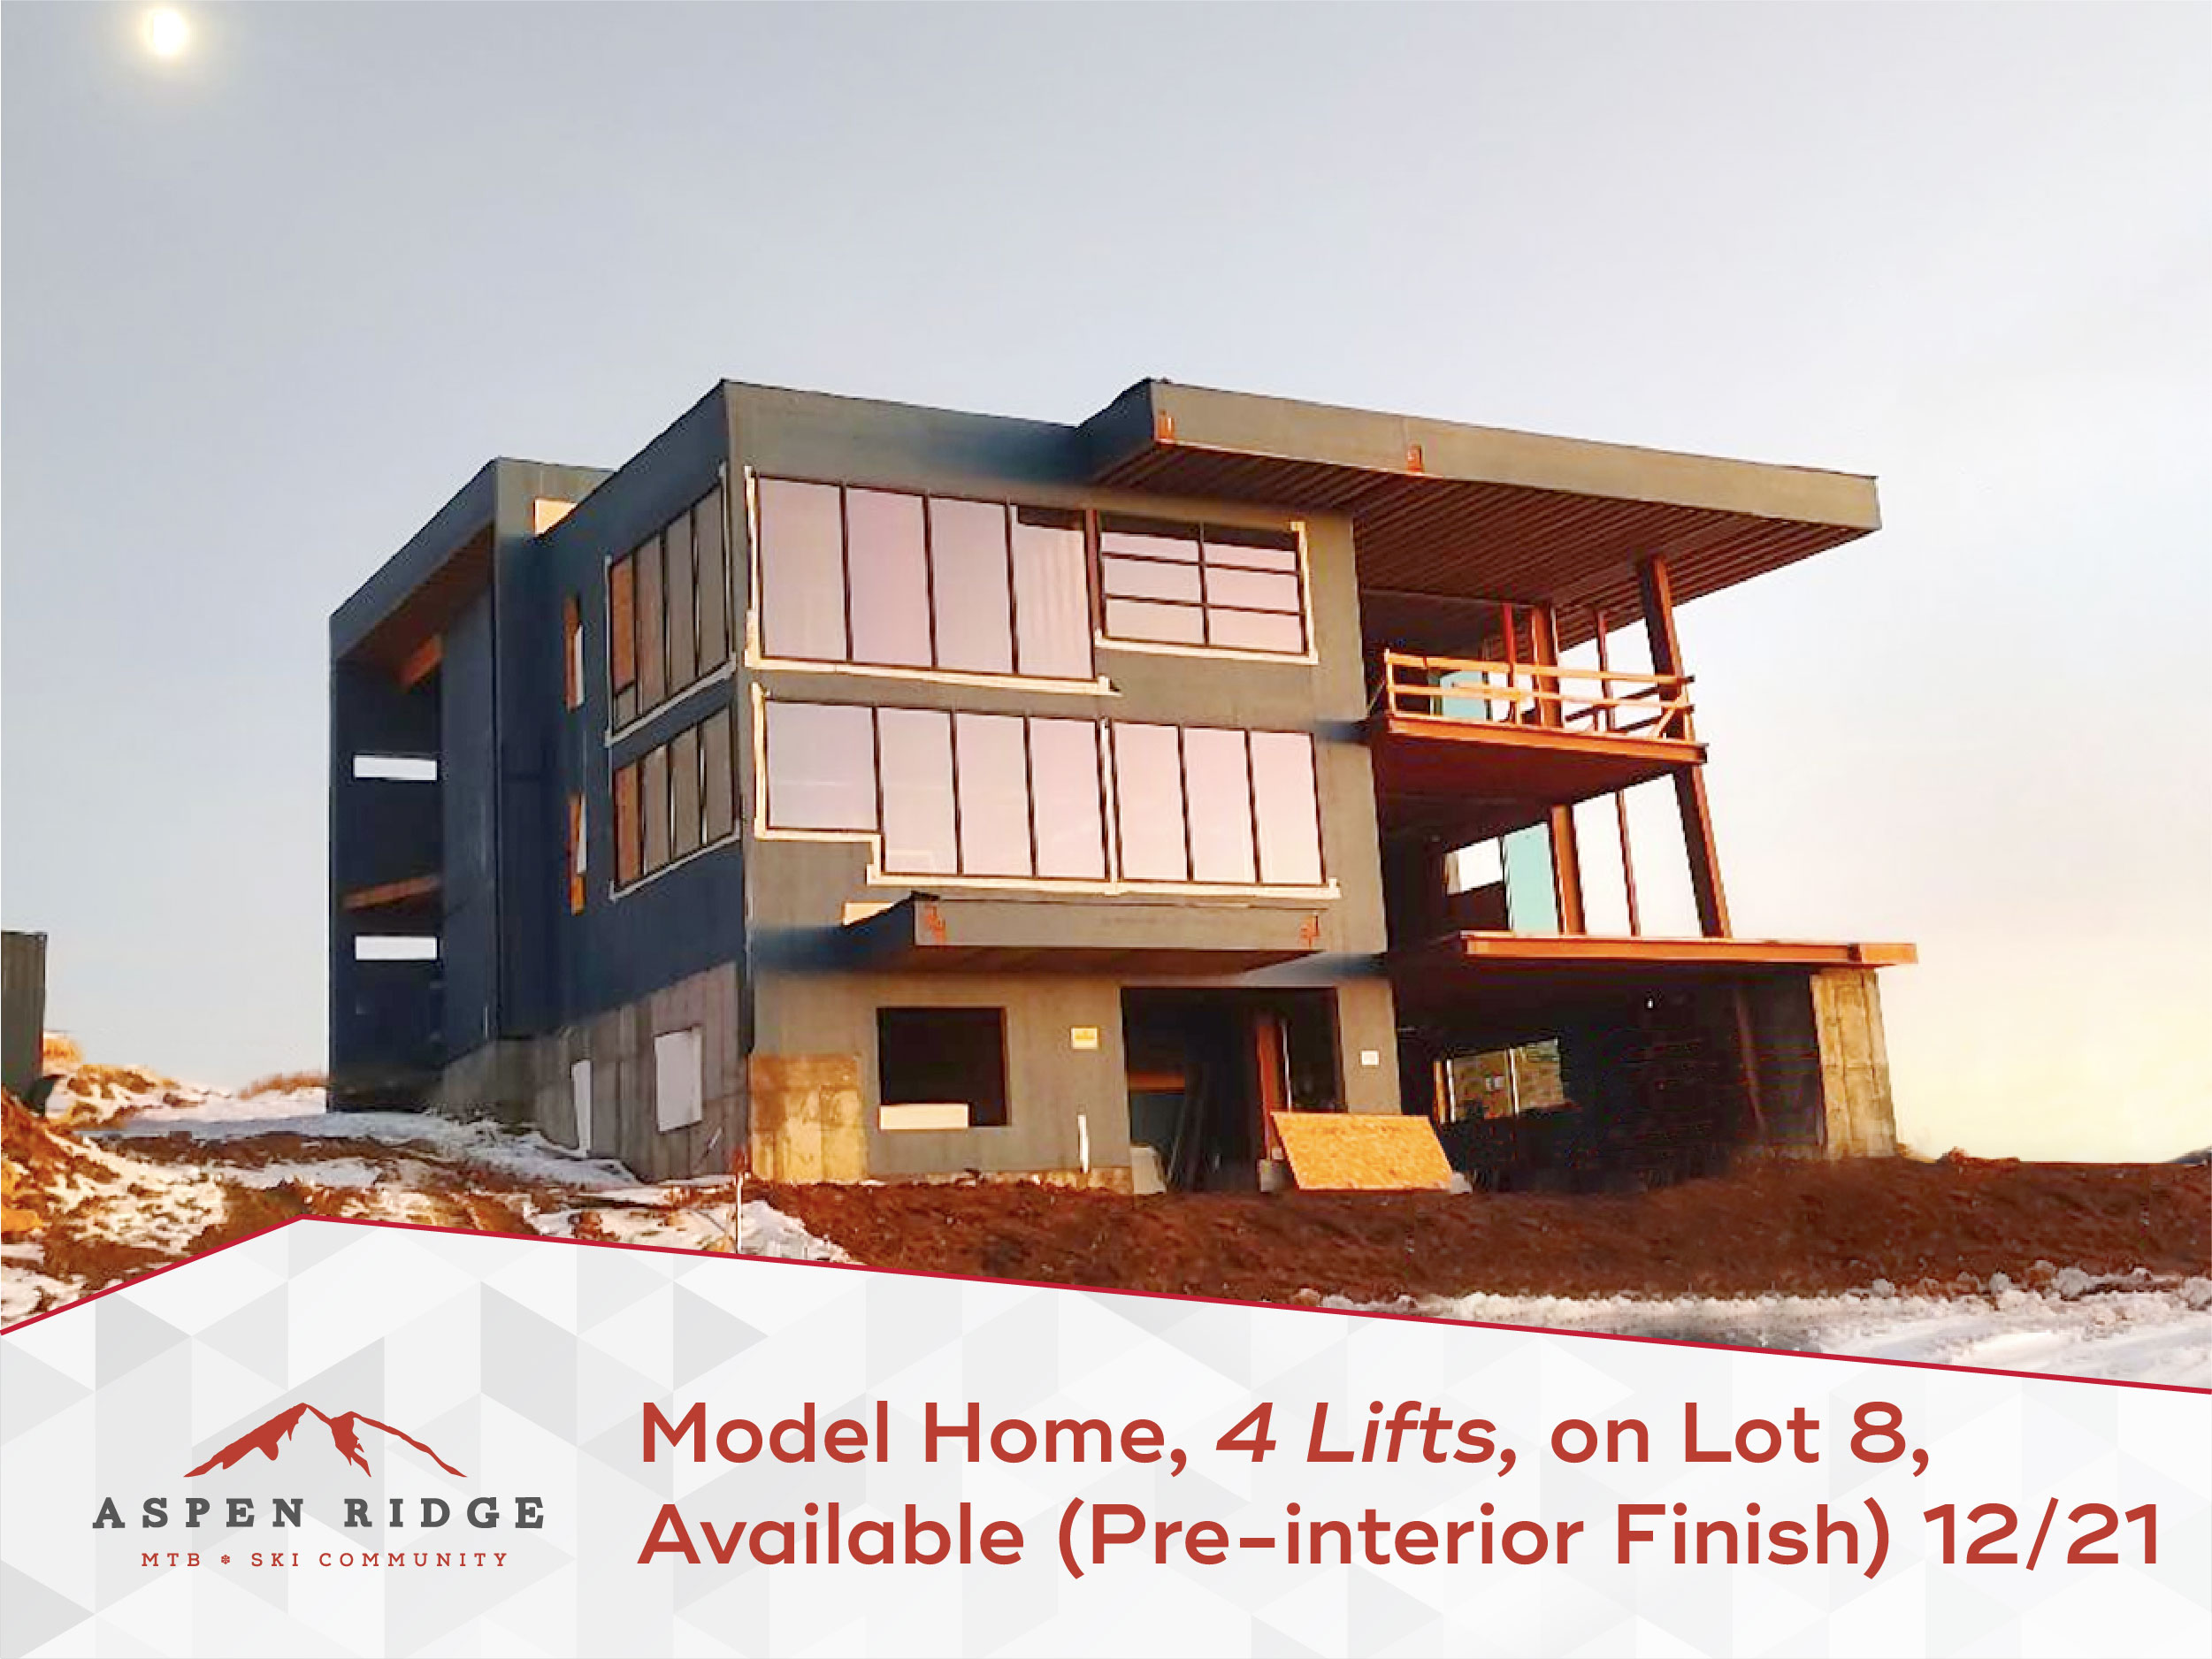 Aspen Ridge Model Home Under Construction